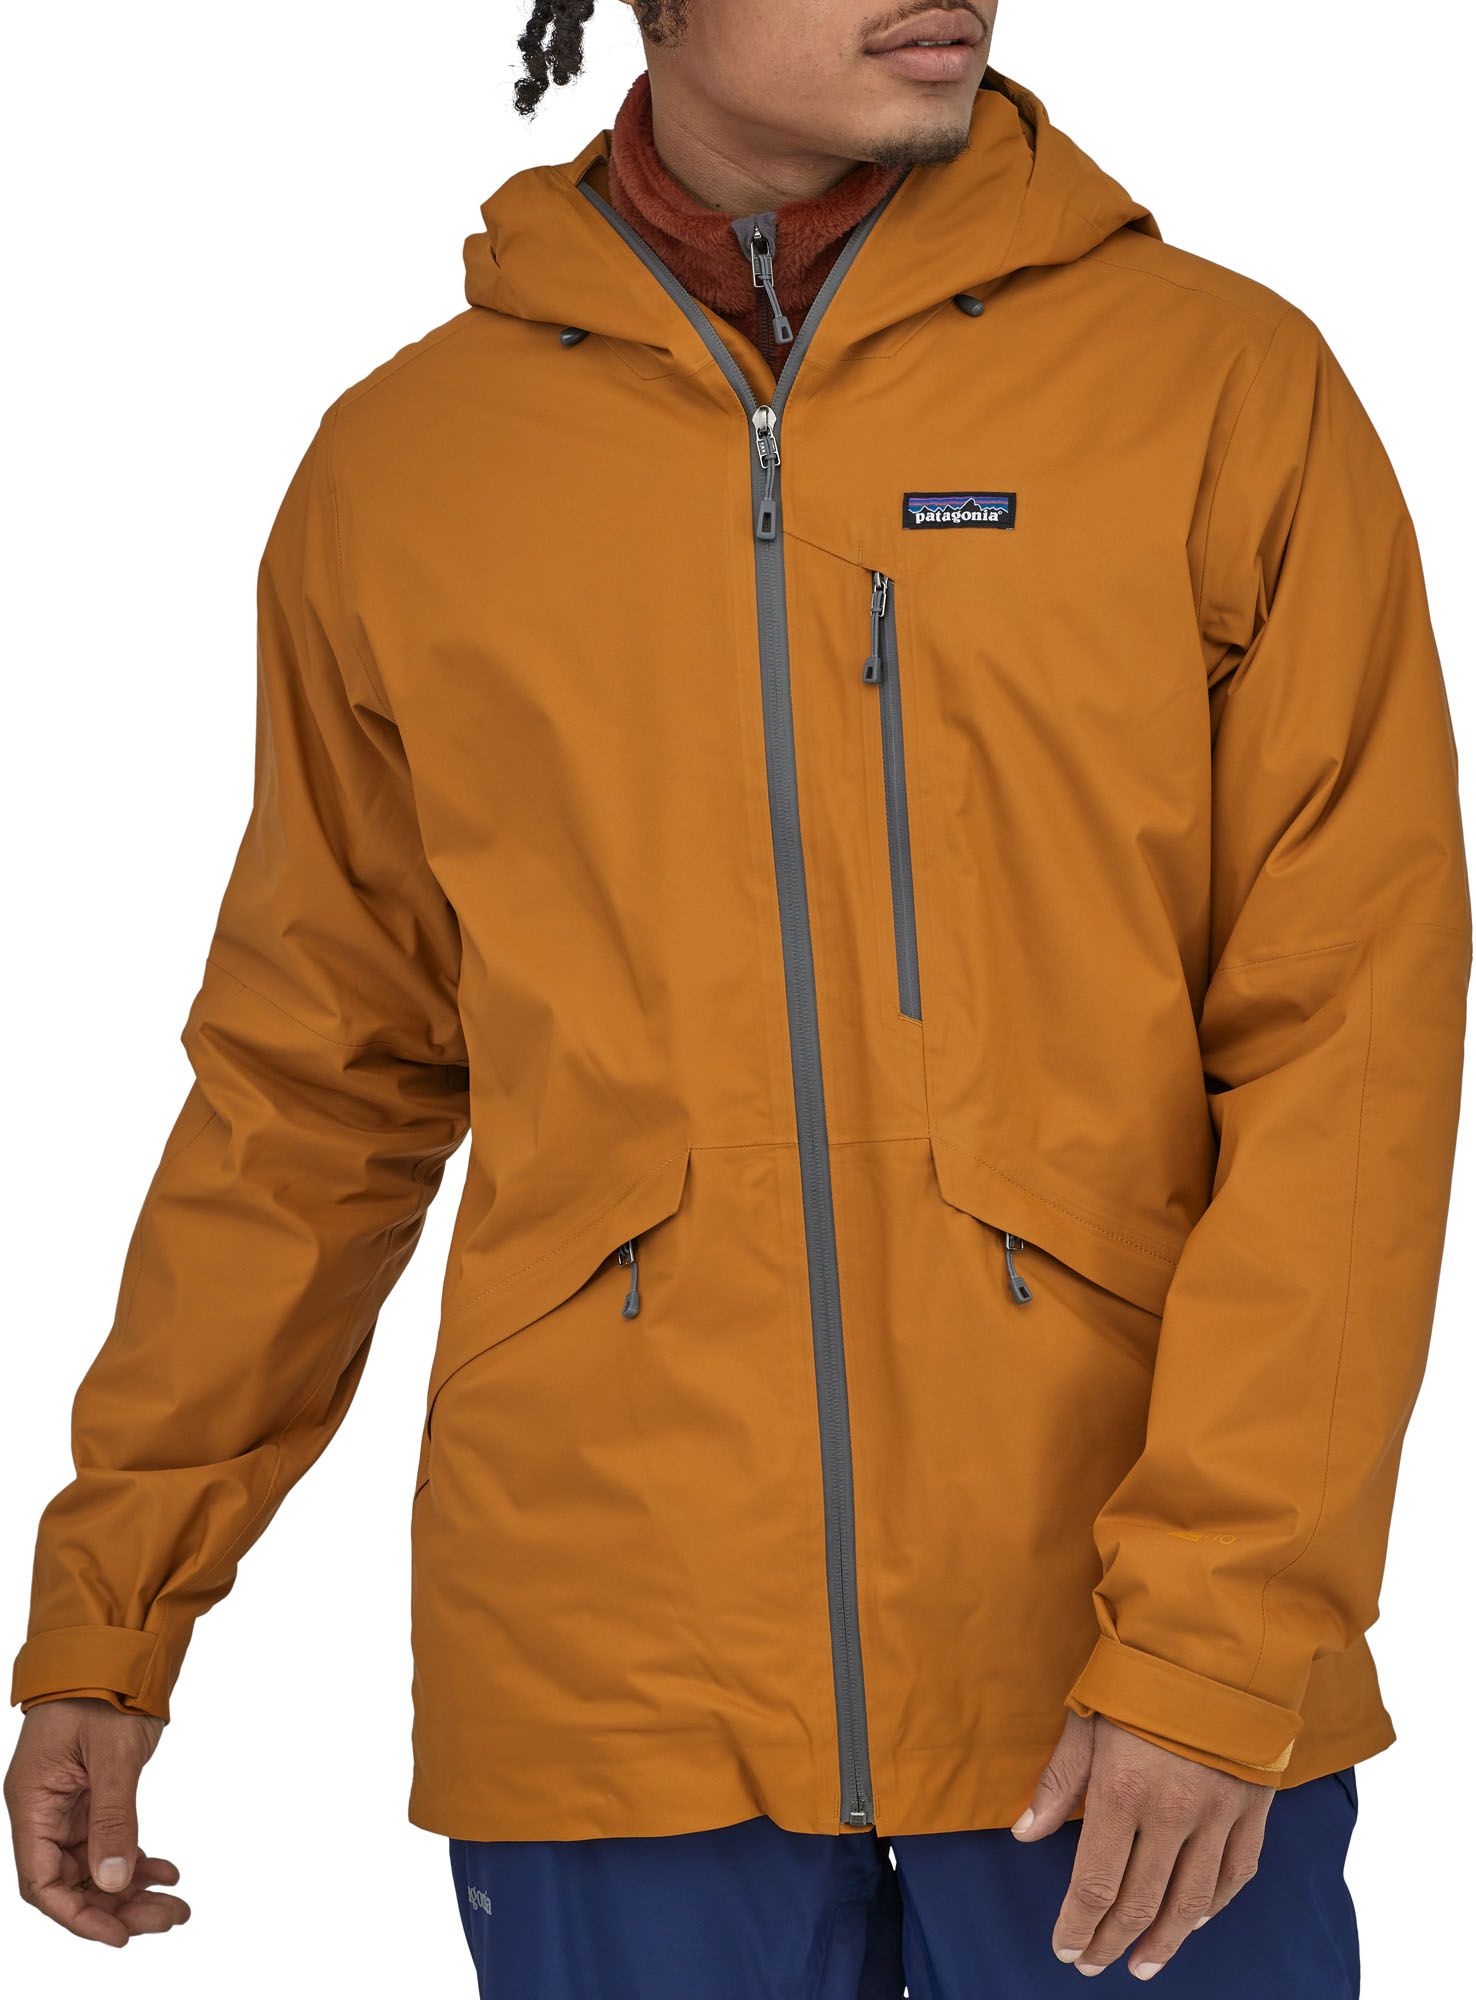 Patagonia Men's Snowshot Insulated Jacket - Walmart.com - Walmart.com